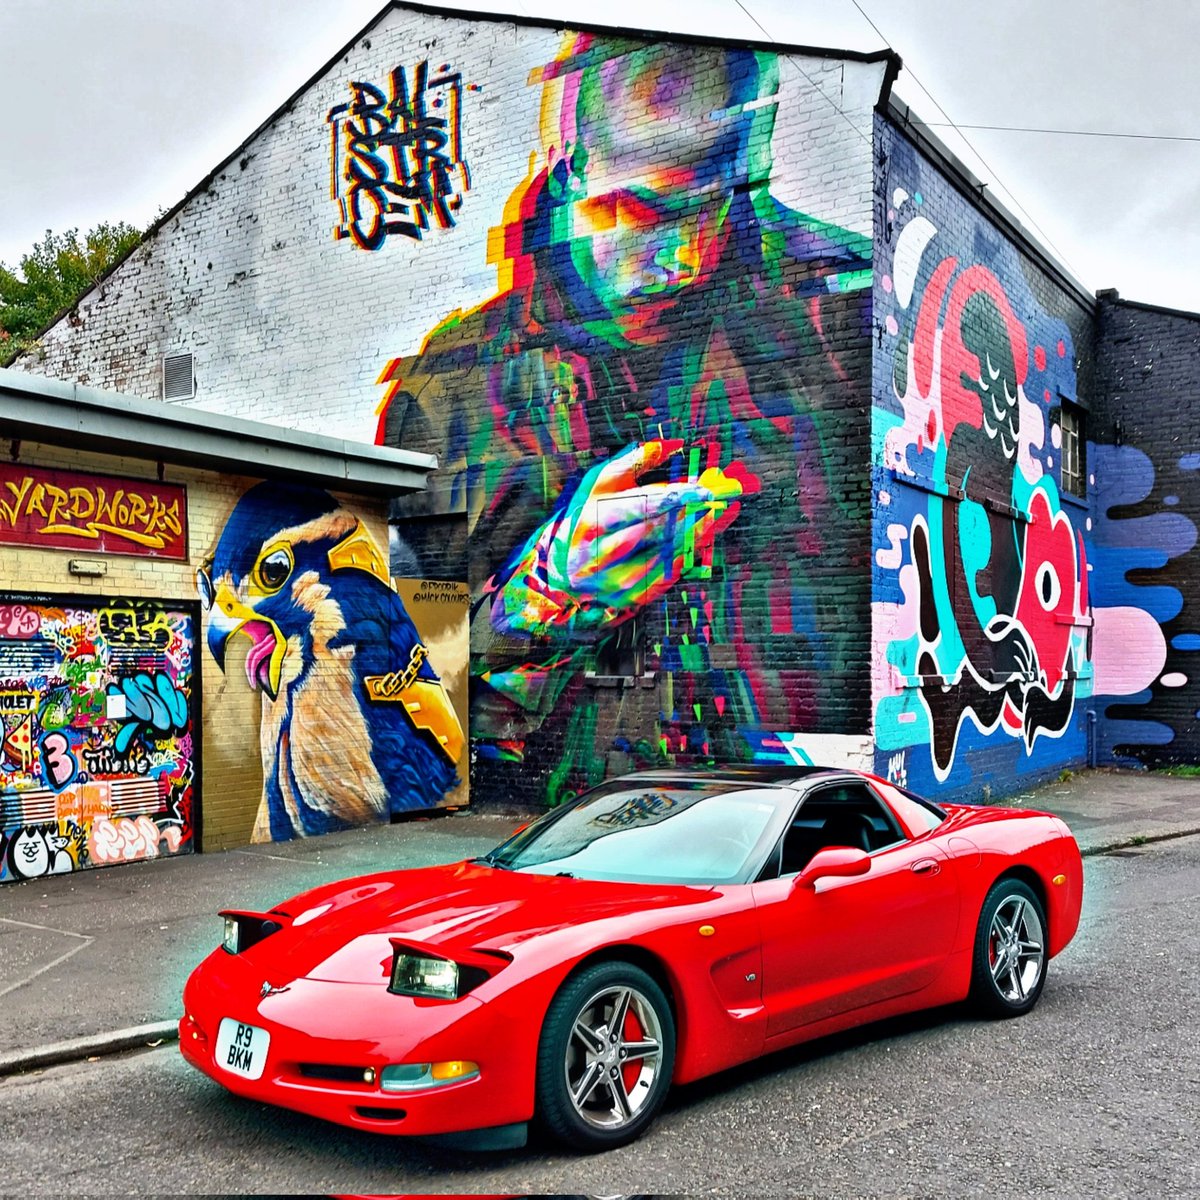 Eastvale Place, Glasgow 💯

#Glasgow #visitGlasgow #streetart #graffiti #graffitiart #balstroem #scotland #corvette #c5 #Chevrolet #corvettec5 #chevroletcorvette